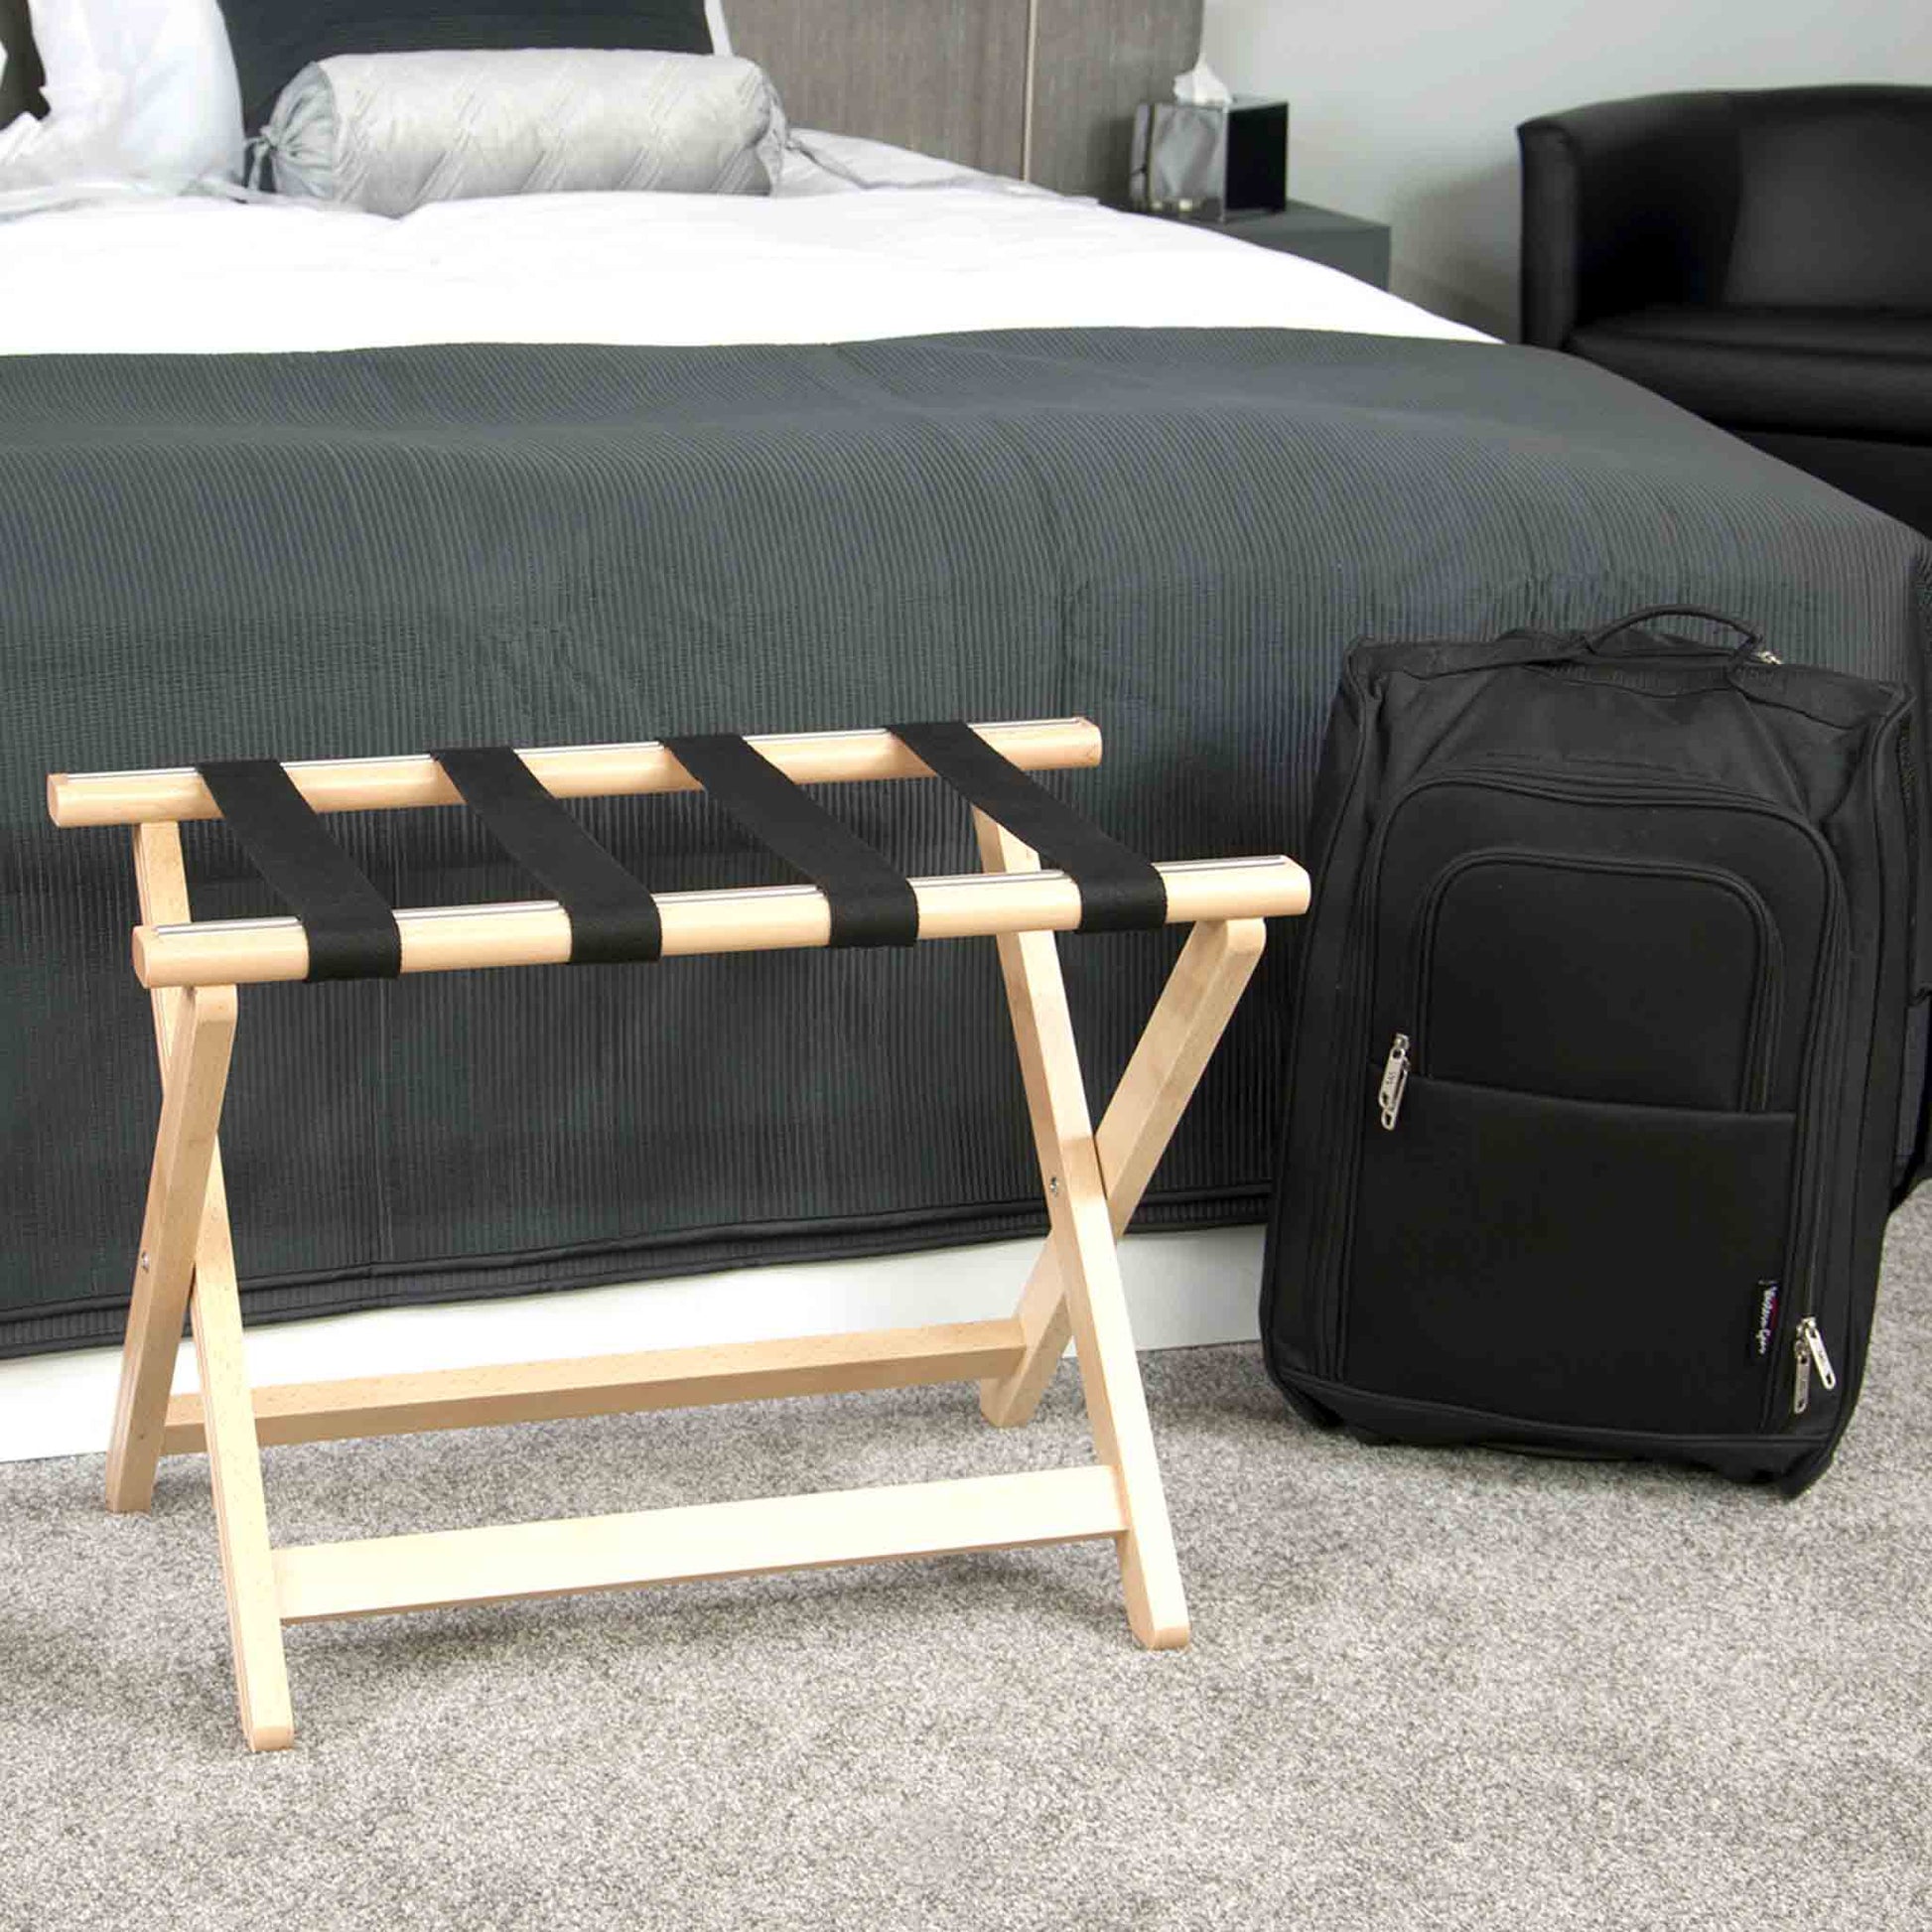 Corby beech wood luggage rack in hotel bedroom